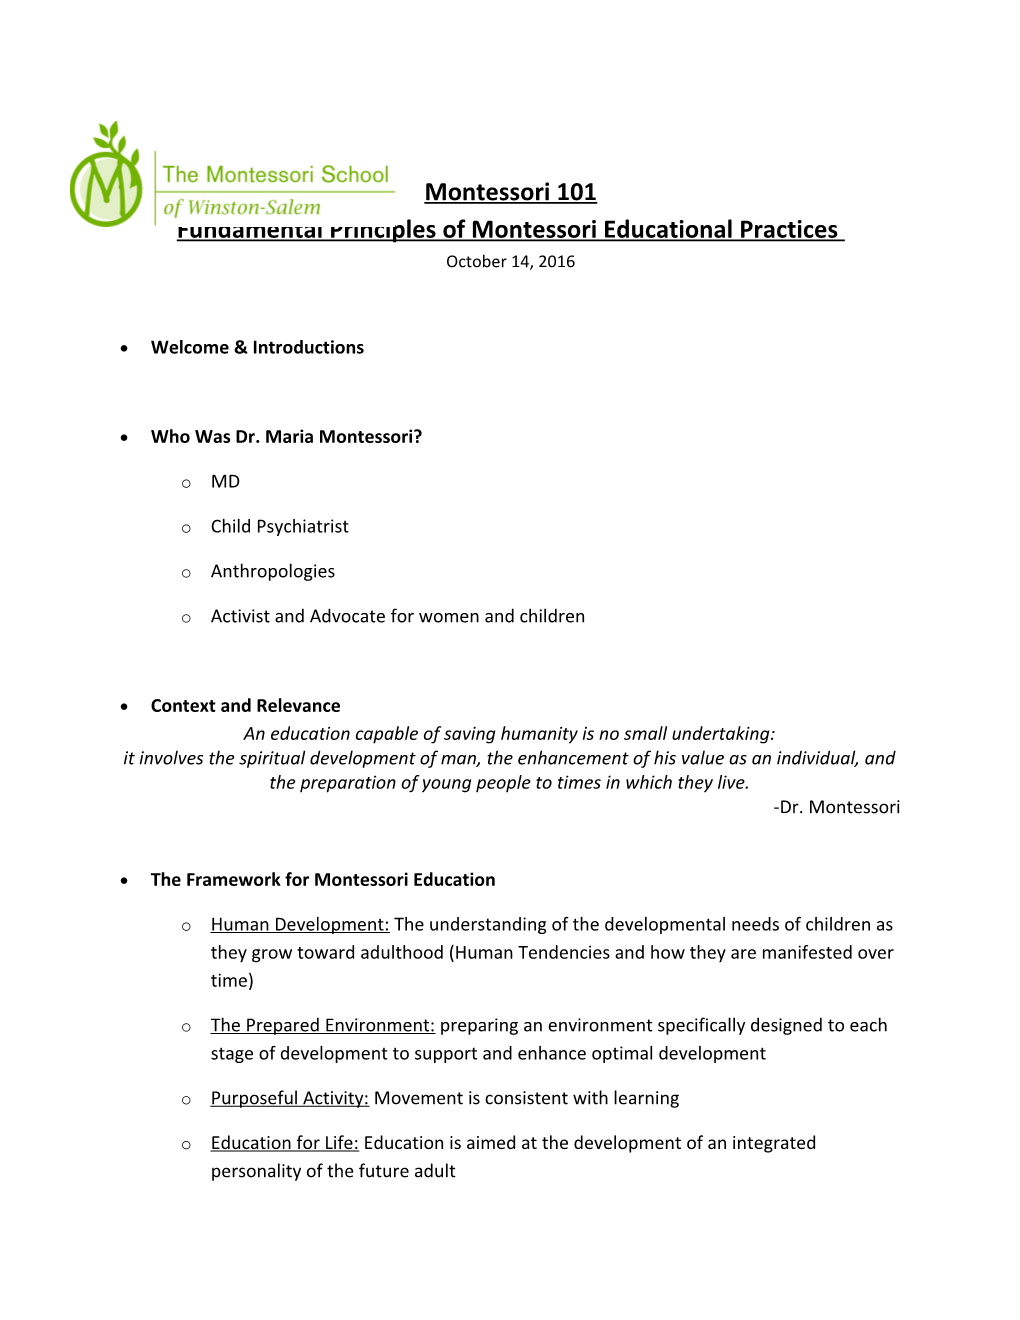 Fundamental Principles of Montessori Educational Practices